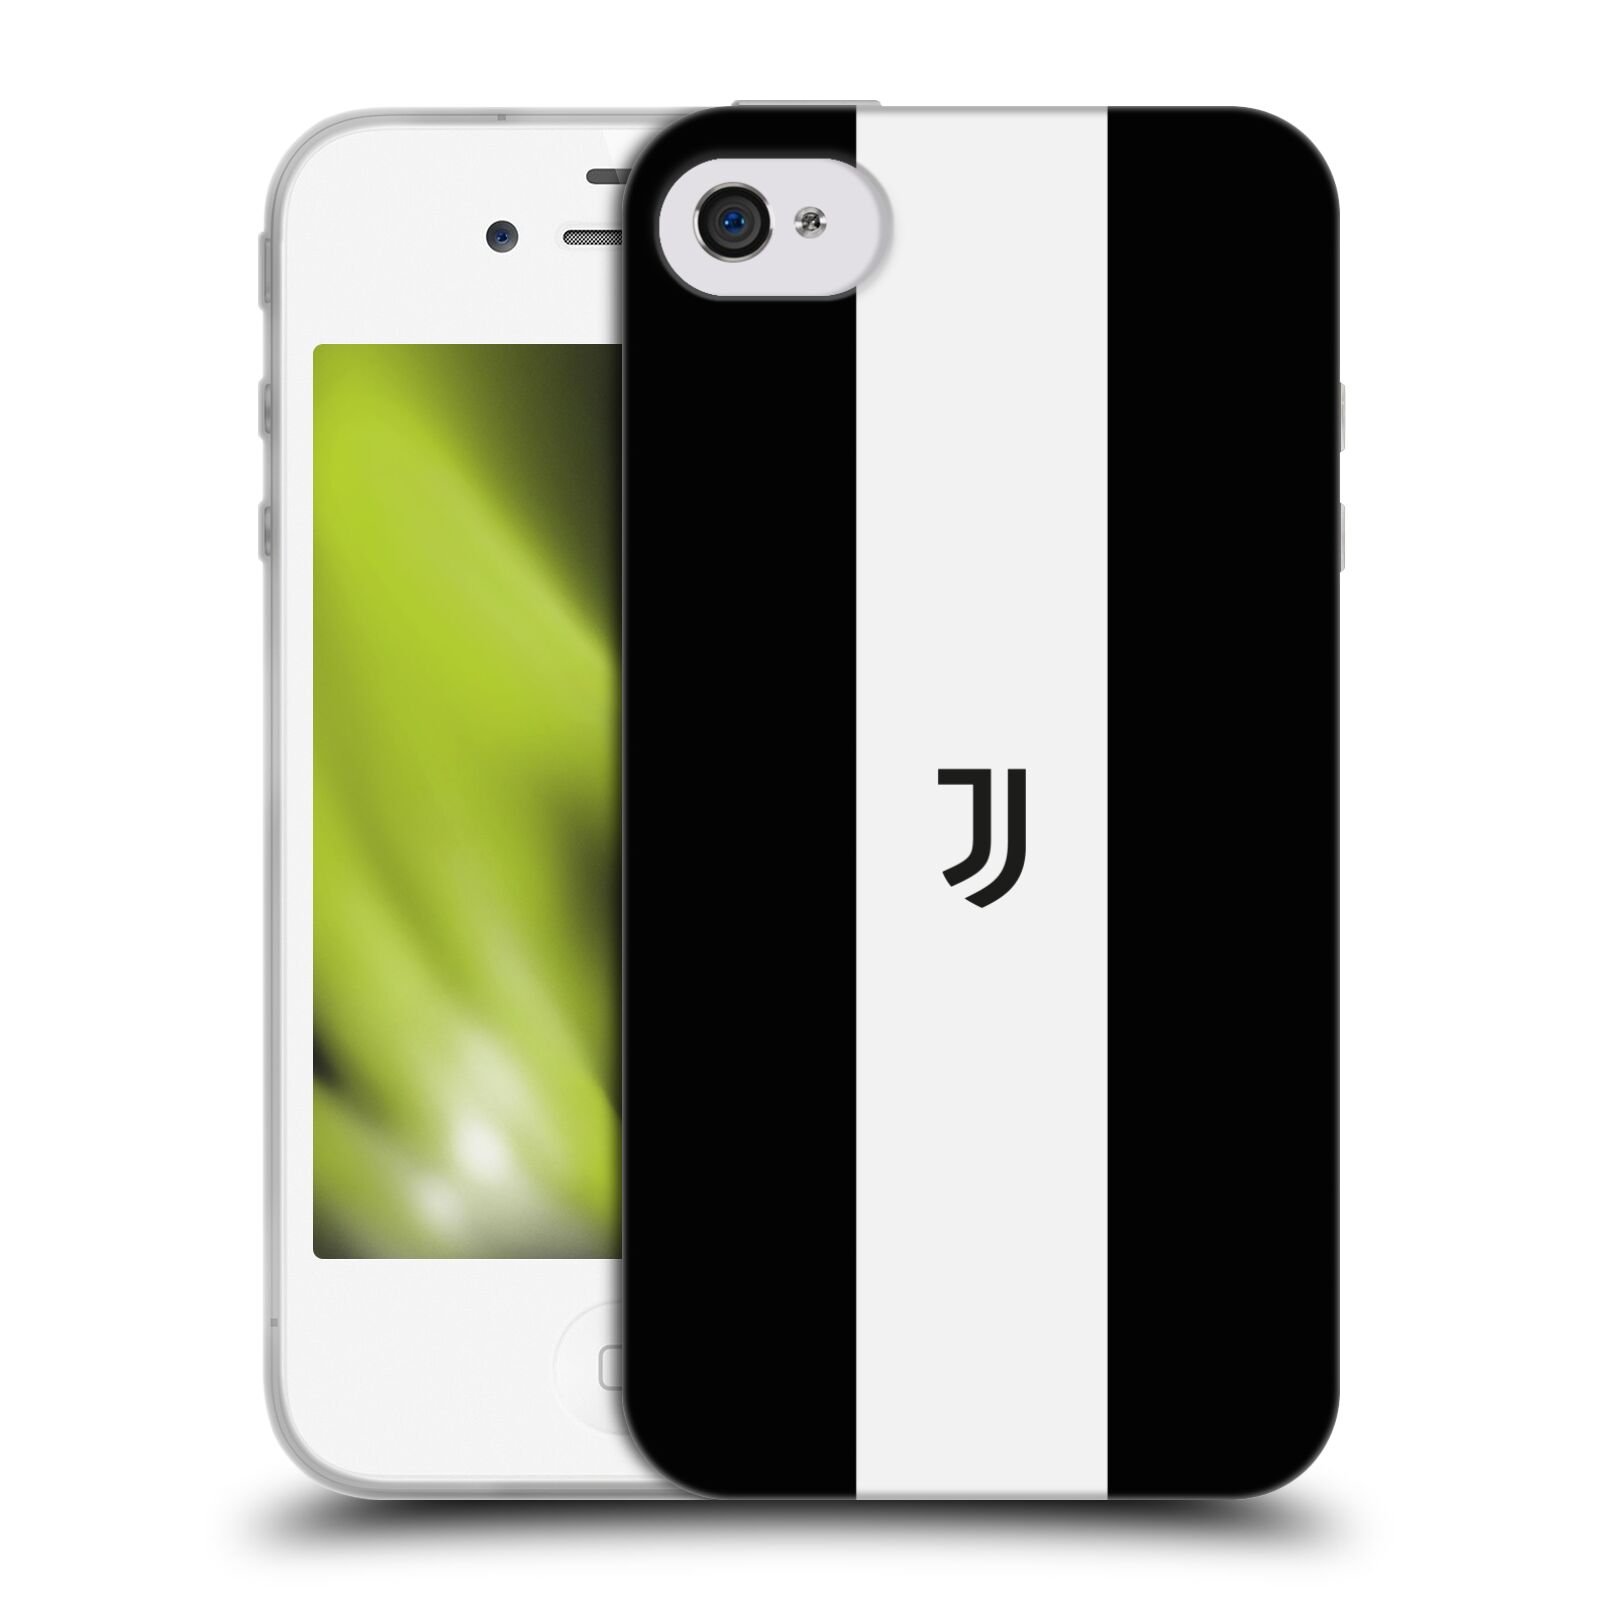 HEAD CASE silikonový obal na mobil Apple Iphone 4 Fotbalový klub Juventus FC pruhy znak černá a bílá